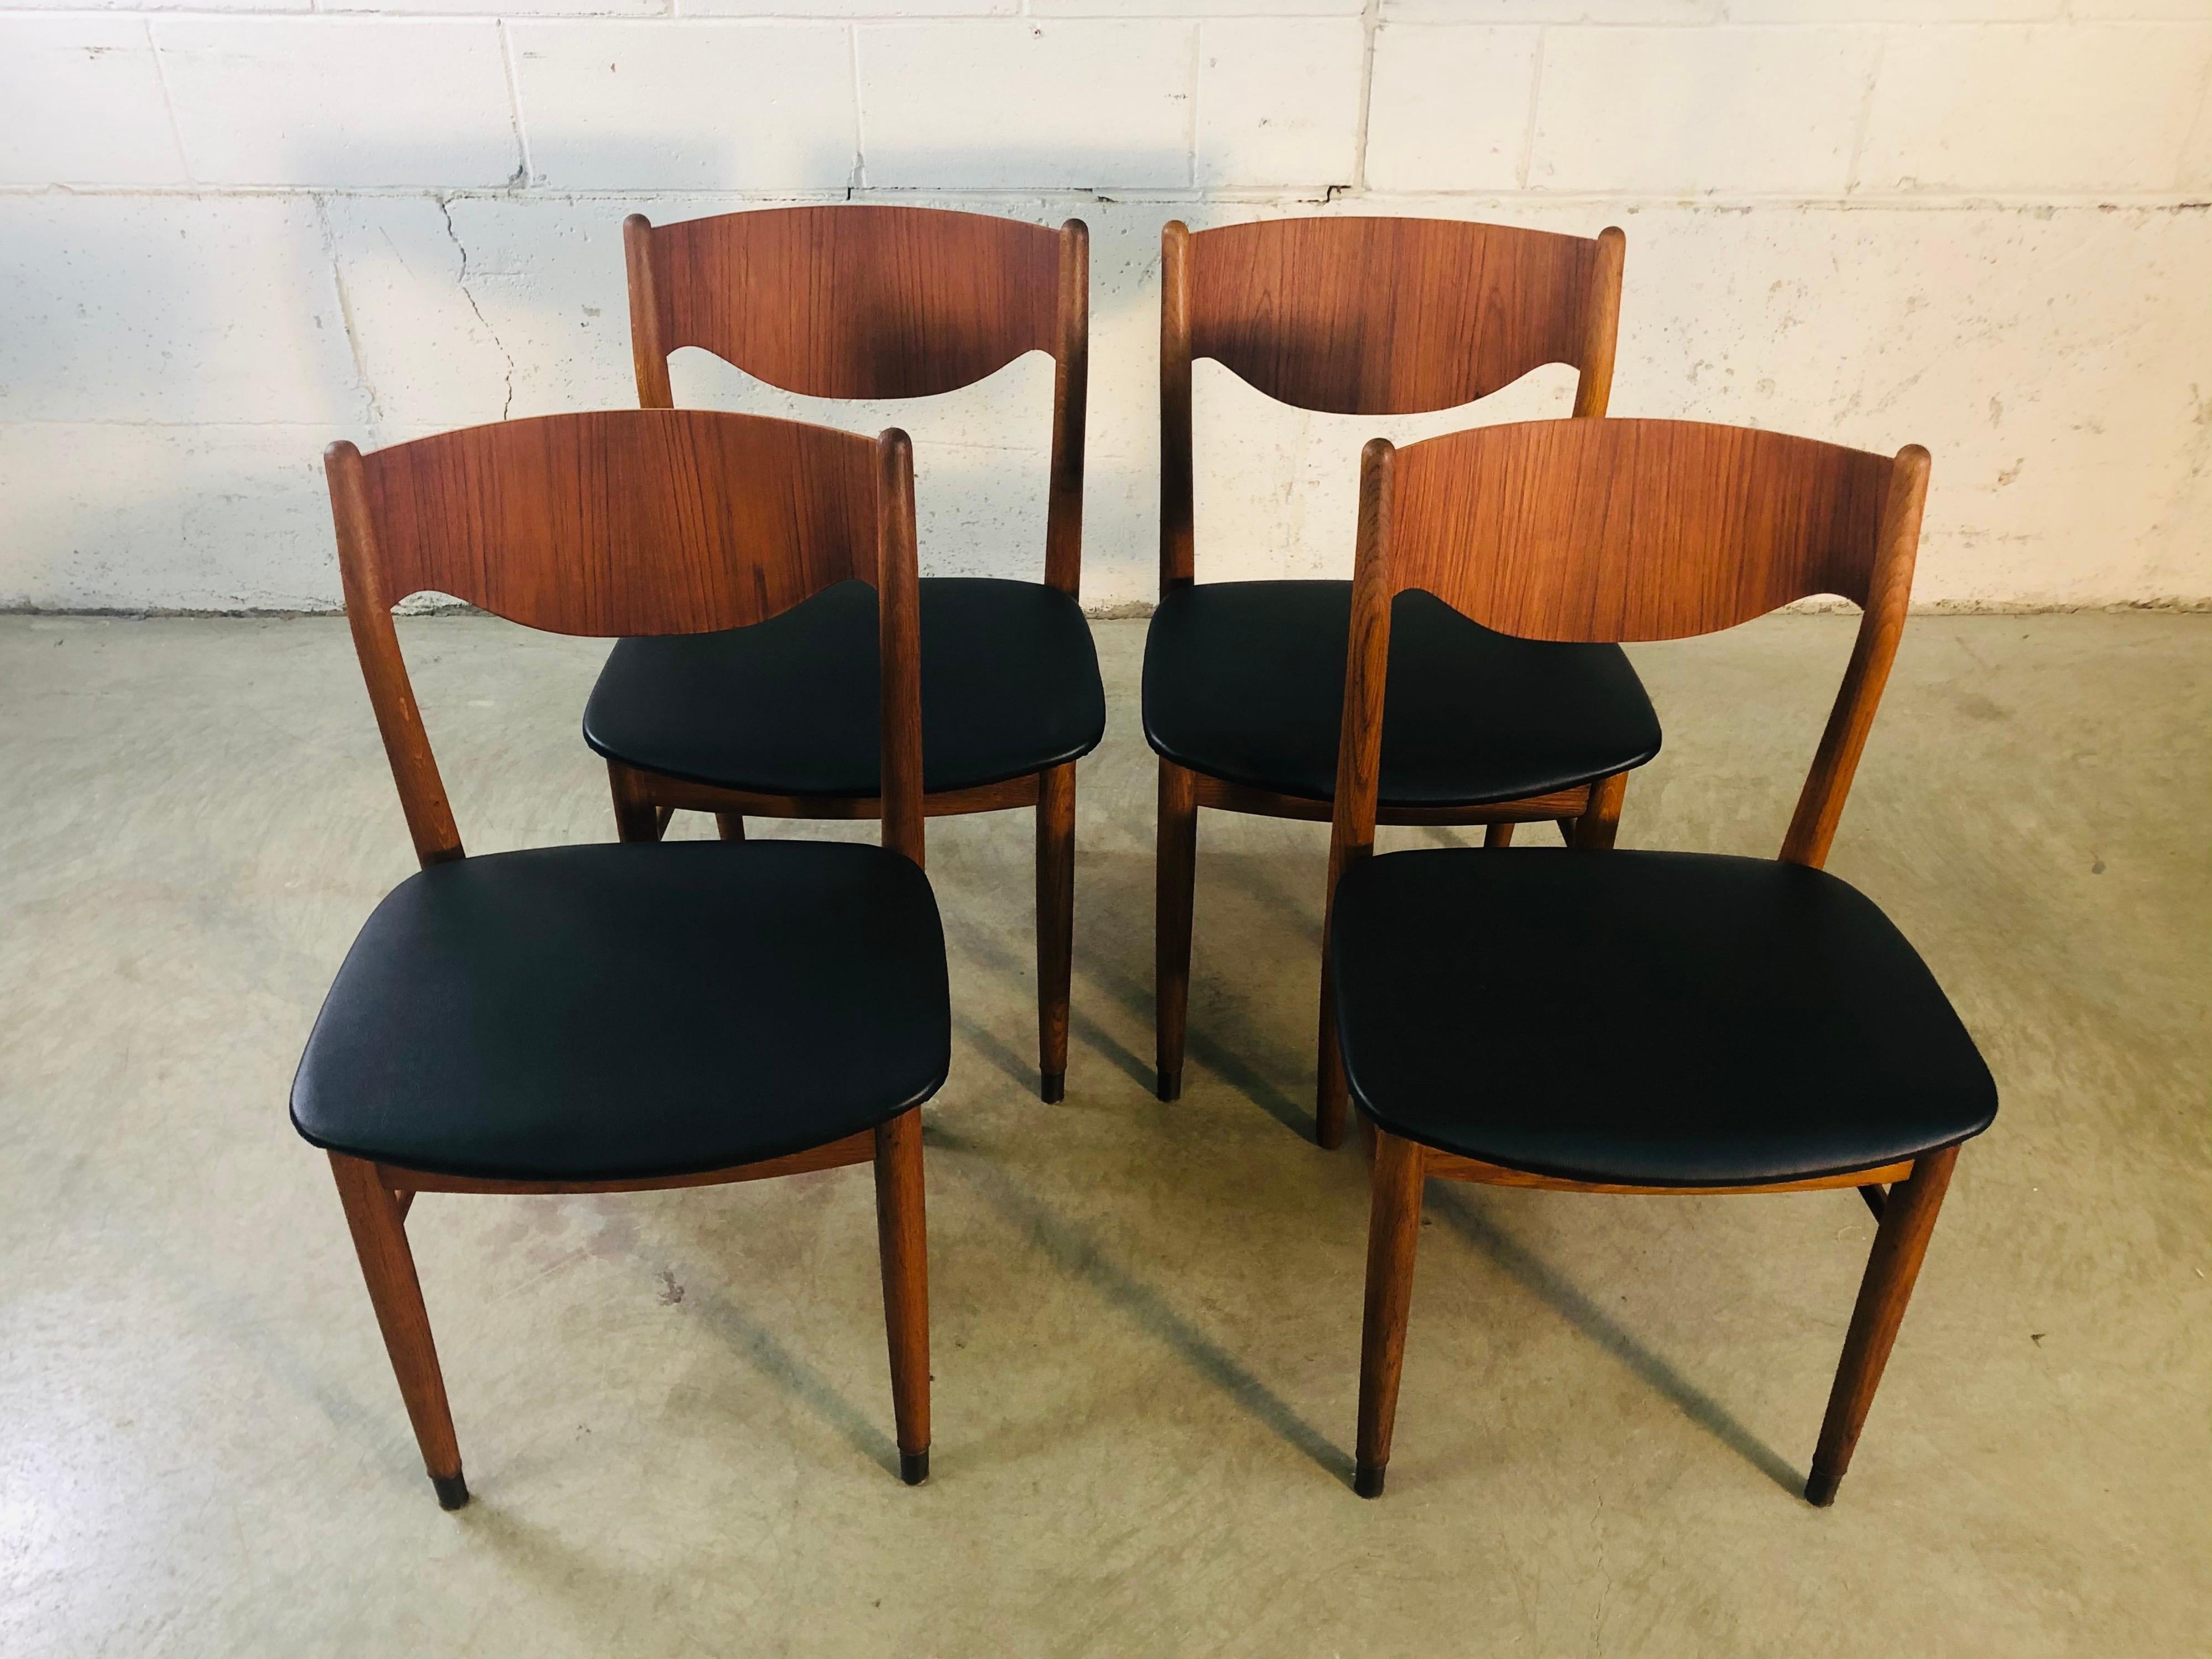 Scandinavian Modern Vintage 1960s Danish Teak and Beech Wood Dining Chairs, Set of 4